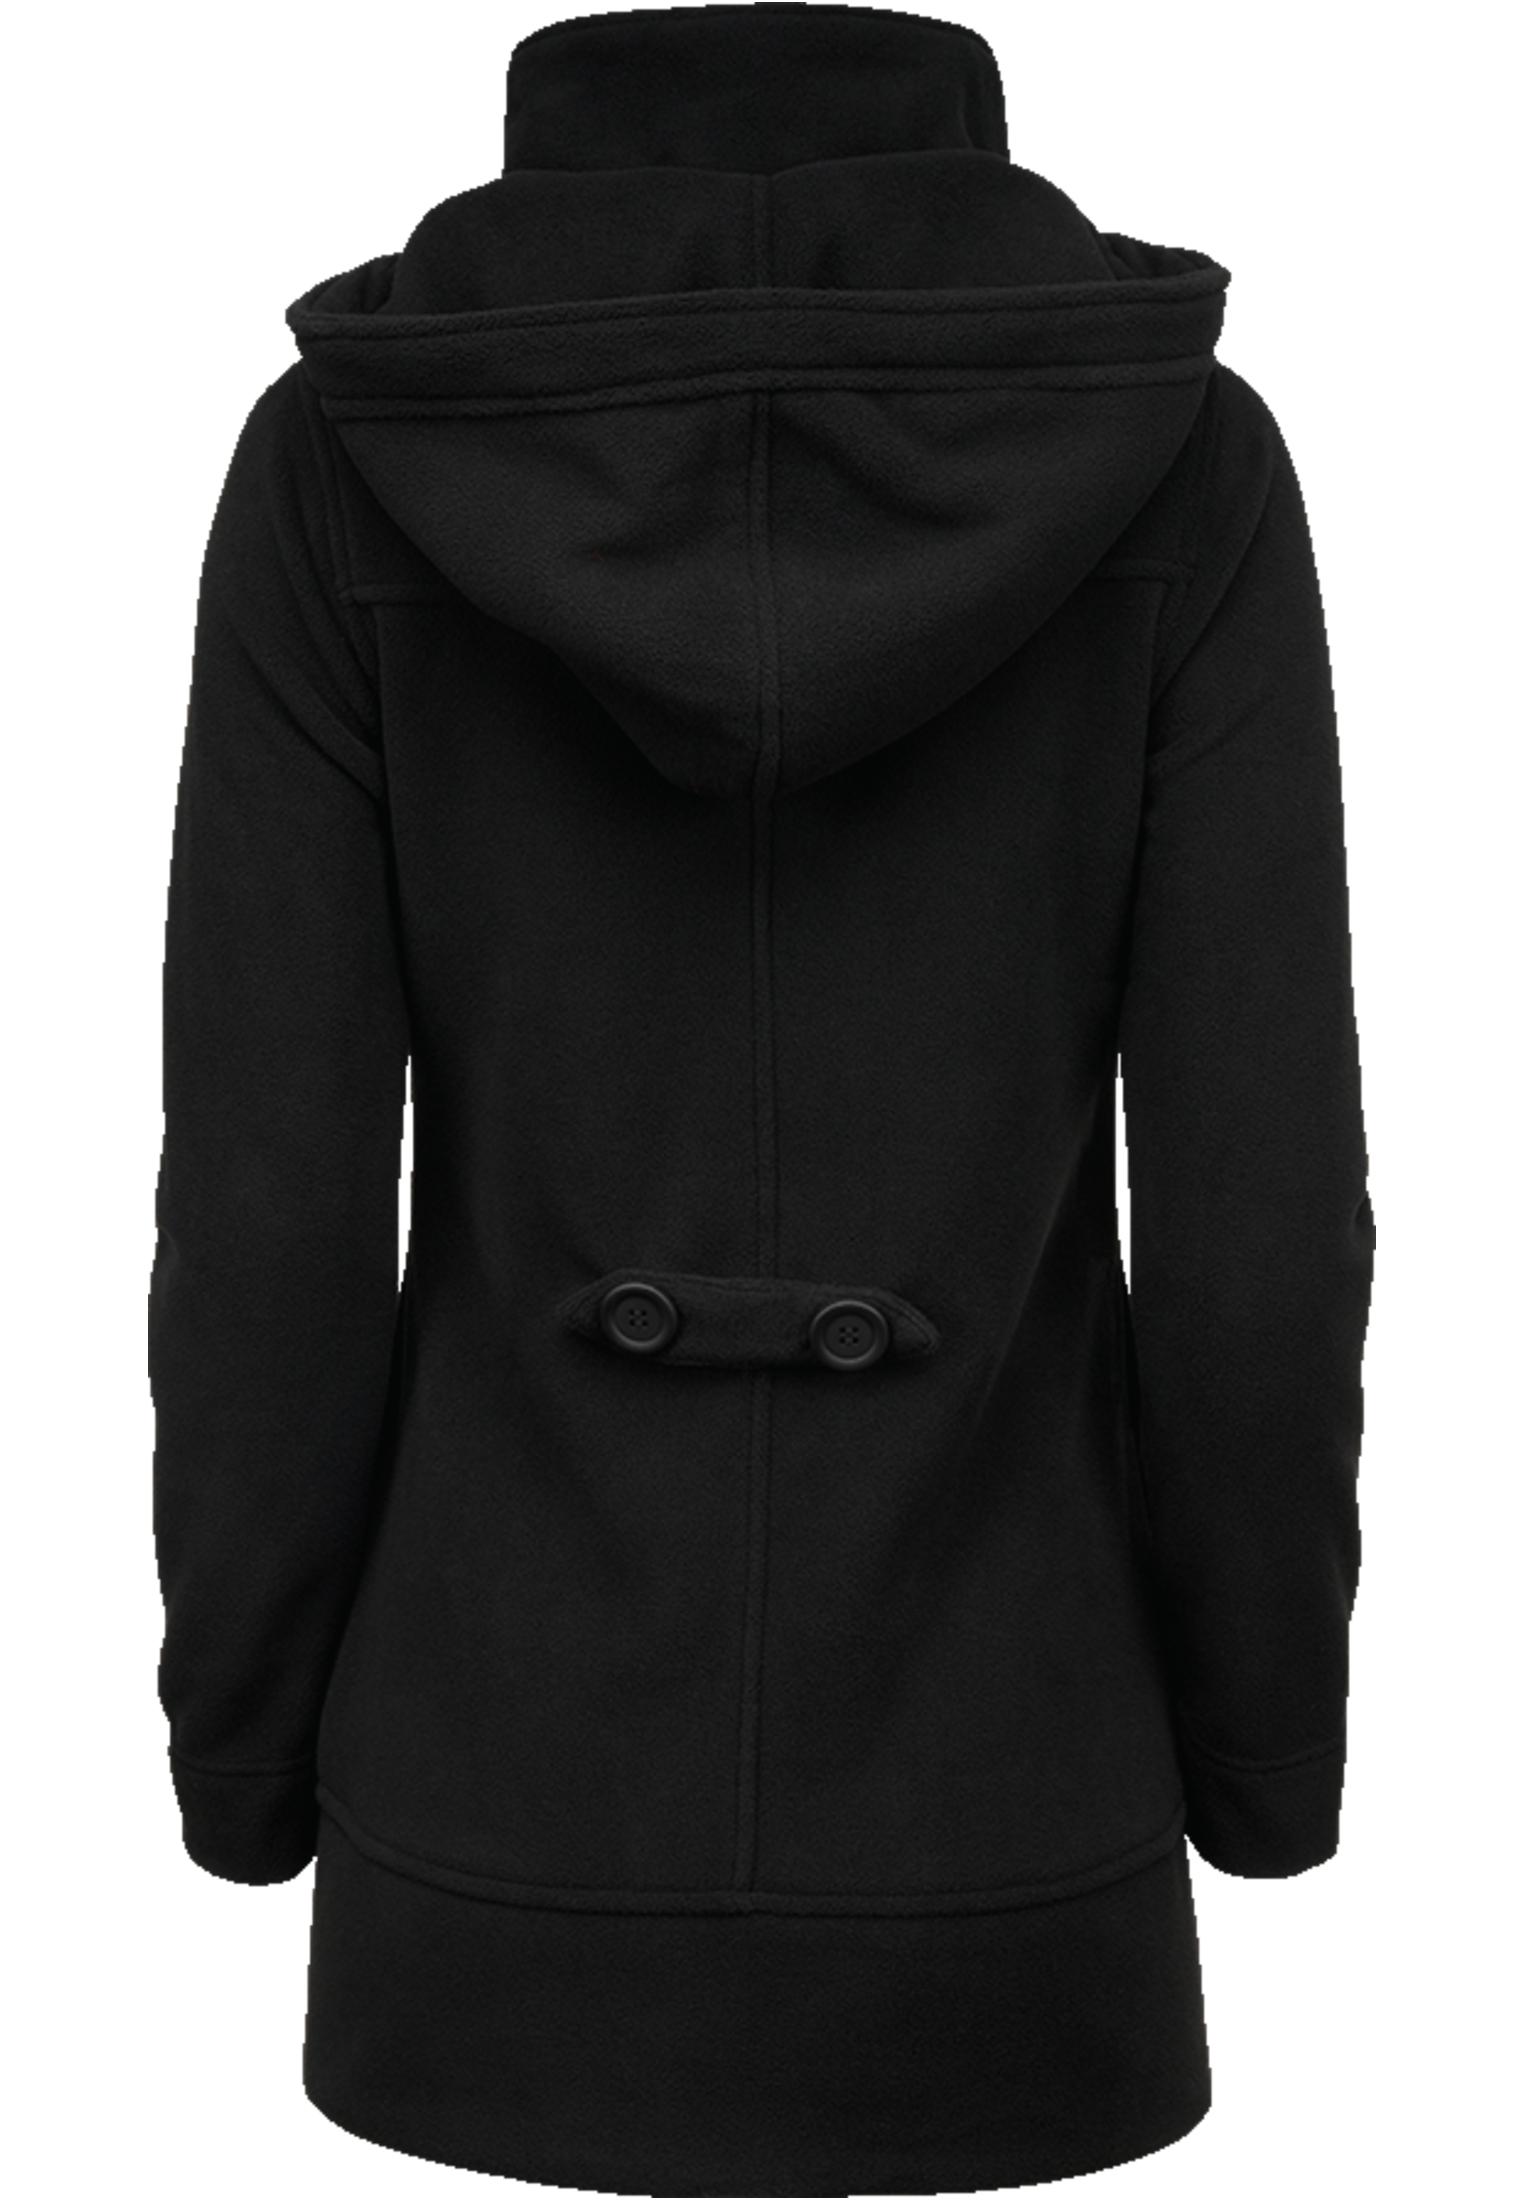 Brandit Women Square Fleece Jacket black (Farbe: black / Größe: S)